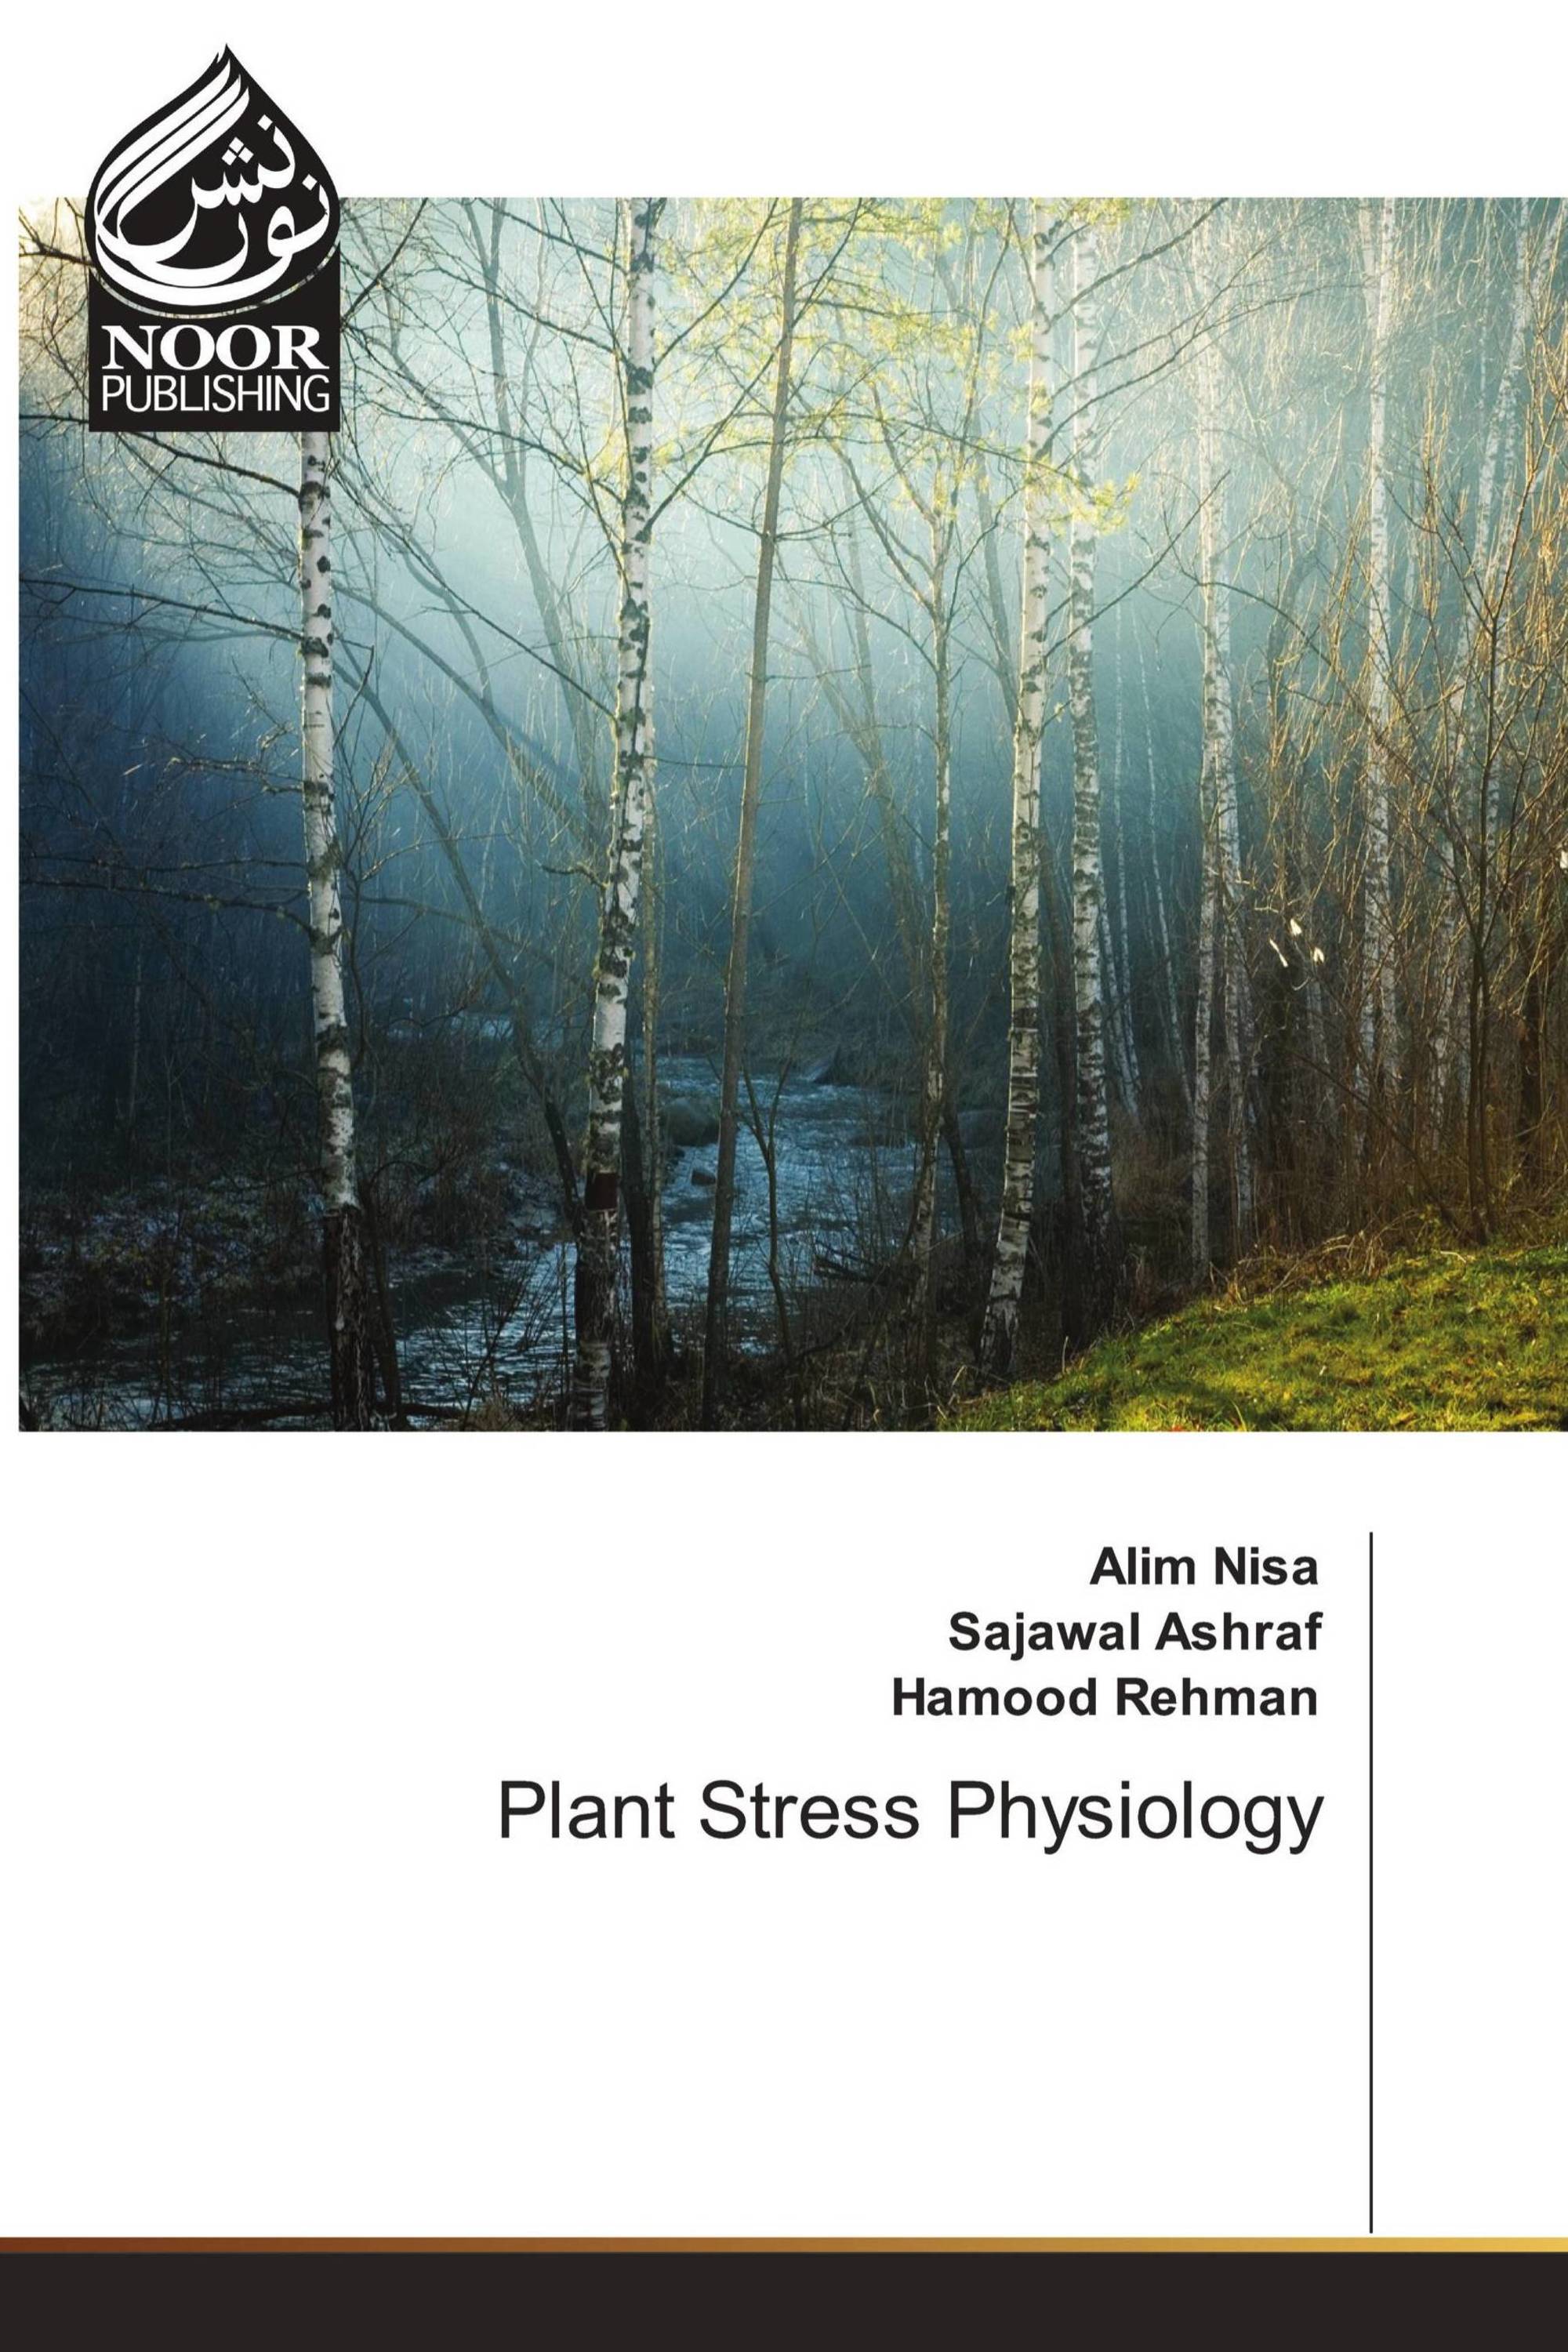 Plant Stress Physiology